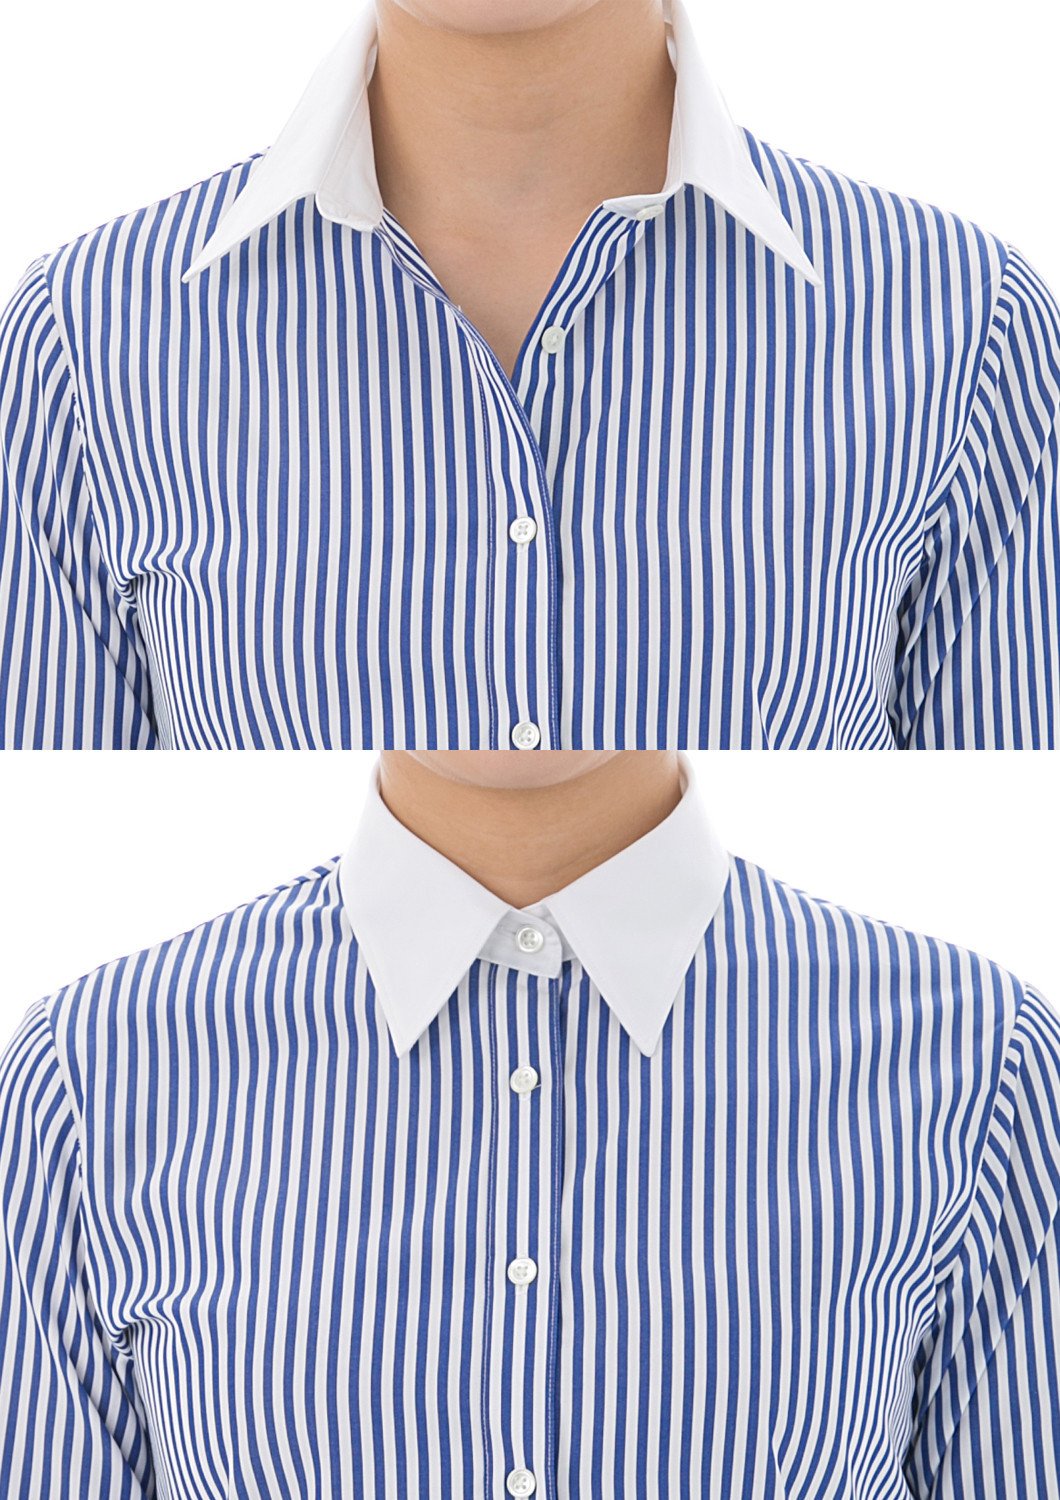 100% Cotton Wrinkle-free<br>White Collared Dress Shirt #.008 - LEONIS SHIRTS & FAVORITES